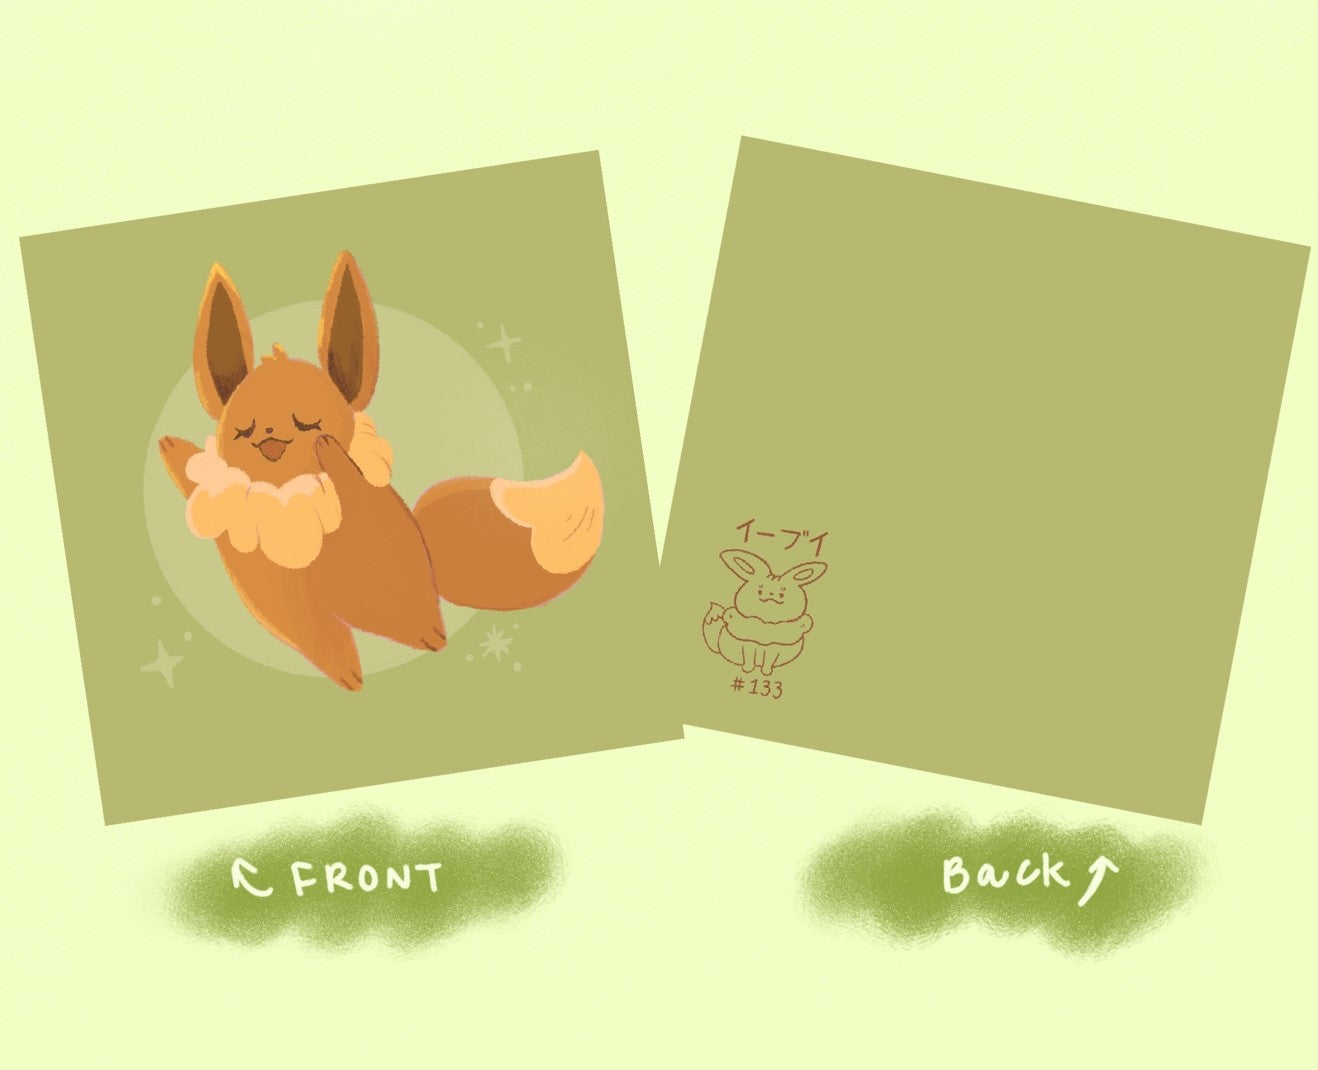 [ATHENA] 4.72" x 4.72" print -Eevee: The evolution Pokemon print